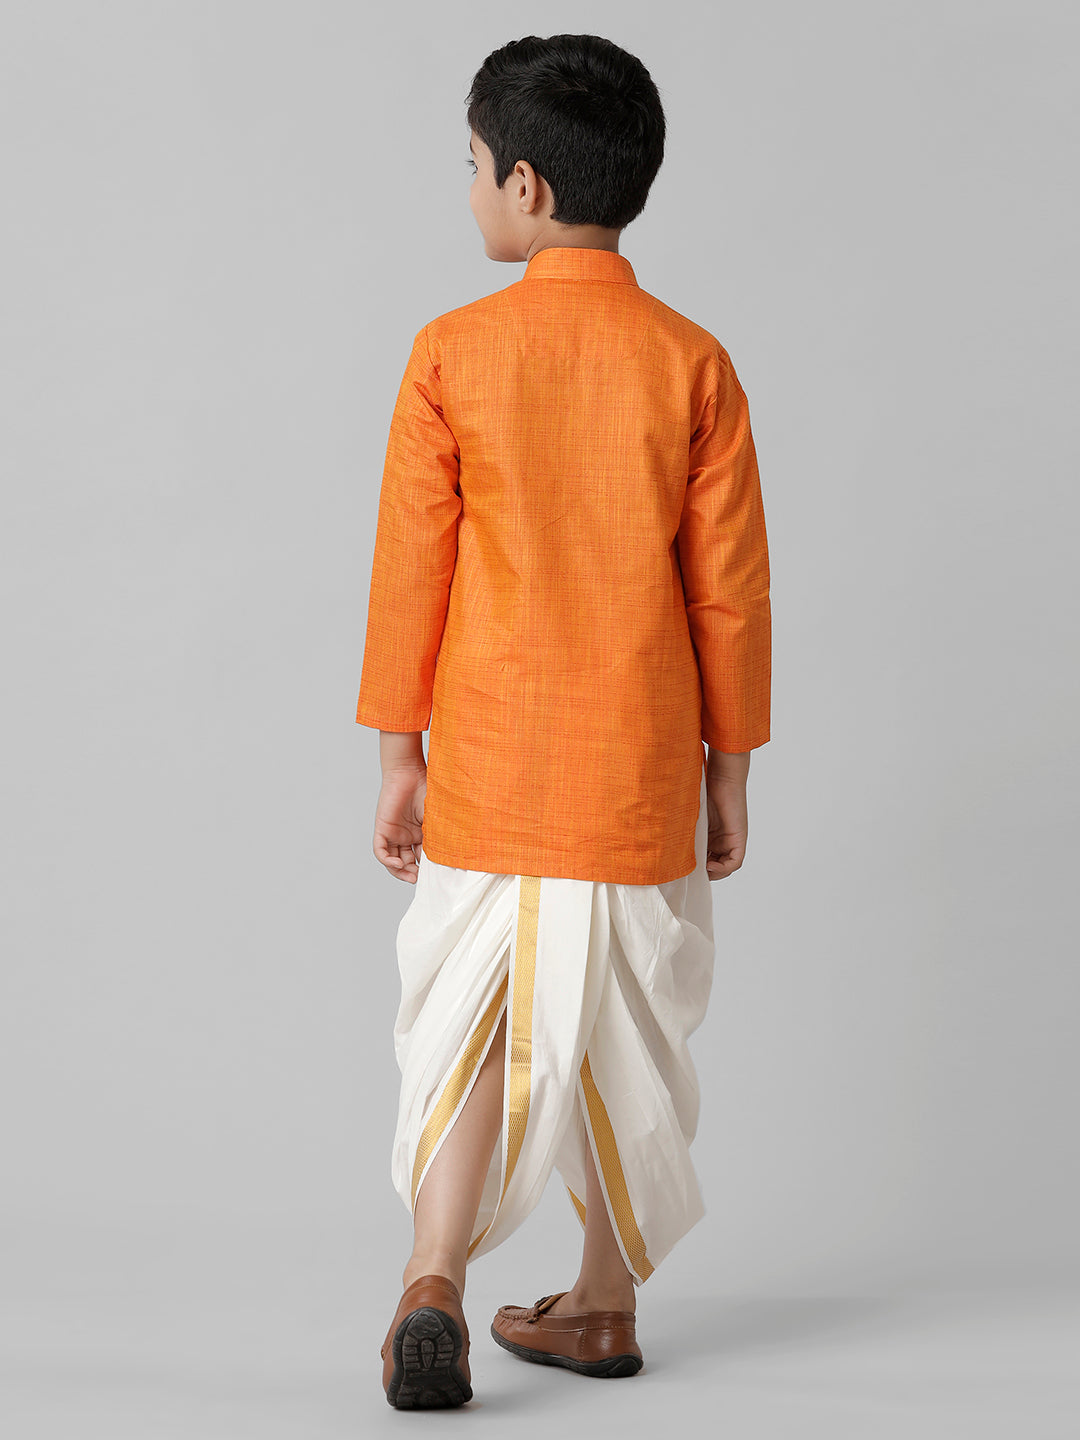 Boys Cotton Orange Kurta with Cream Elastic Panchakacham Combo FS3-Back view